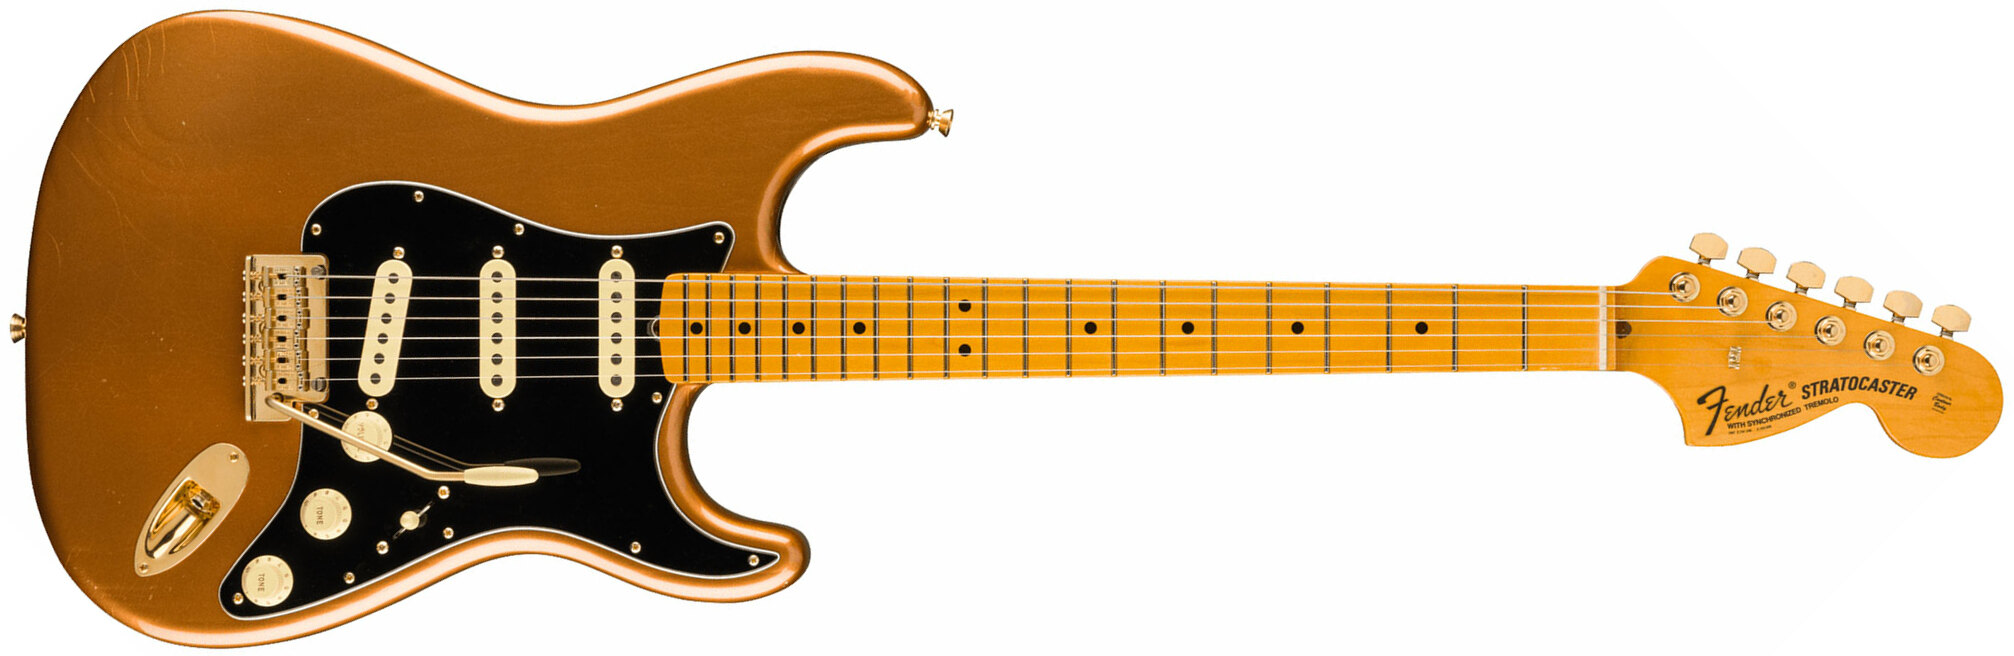 Fender Bruno Mars Strat Usa Signature 3s Trem Mn - Mars Mocha - Guitare Électrique Signature - Main picture